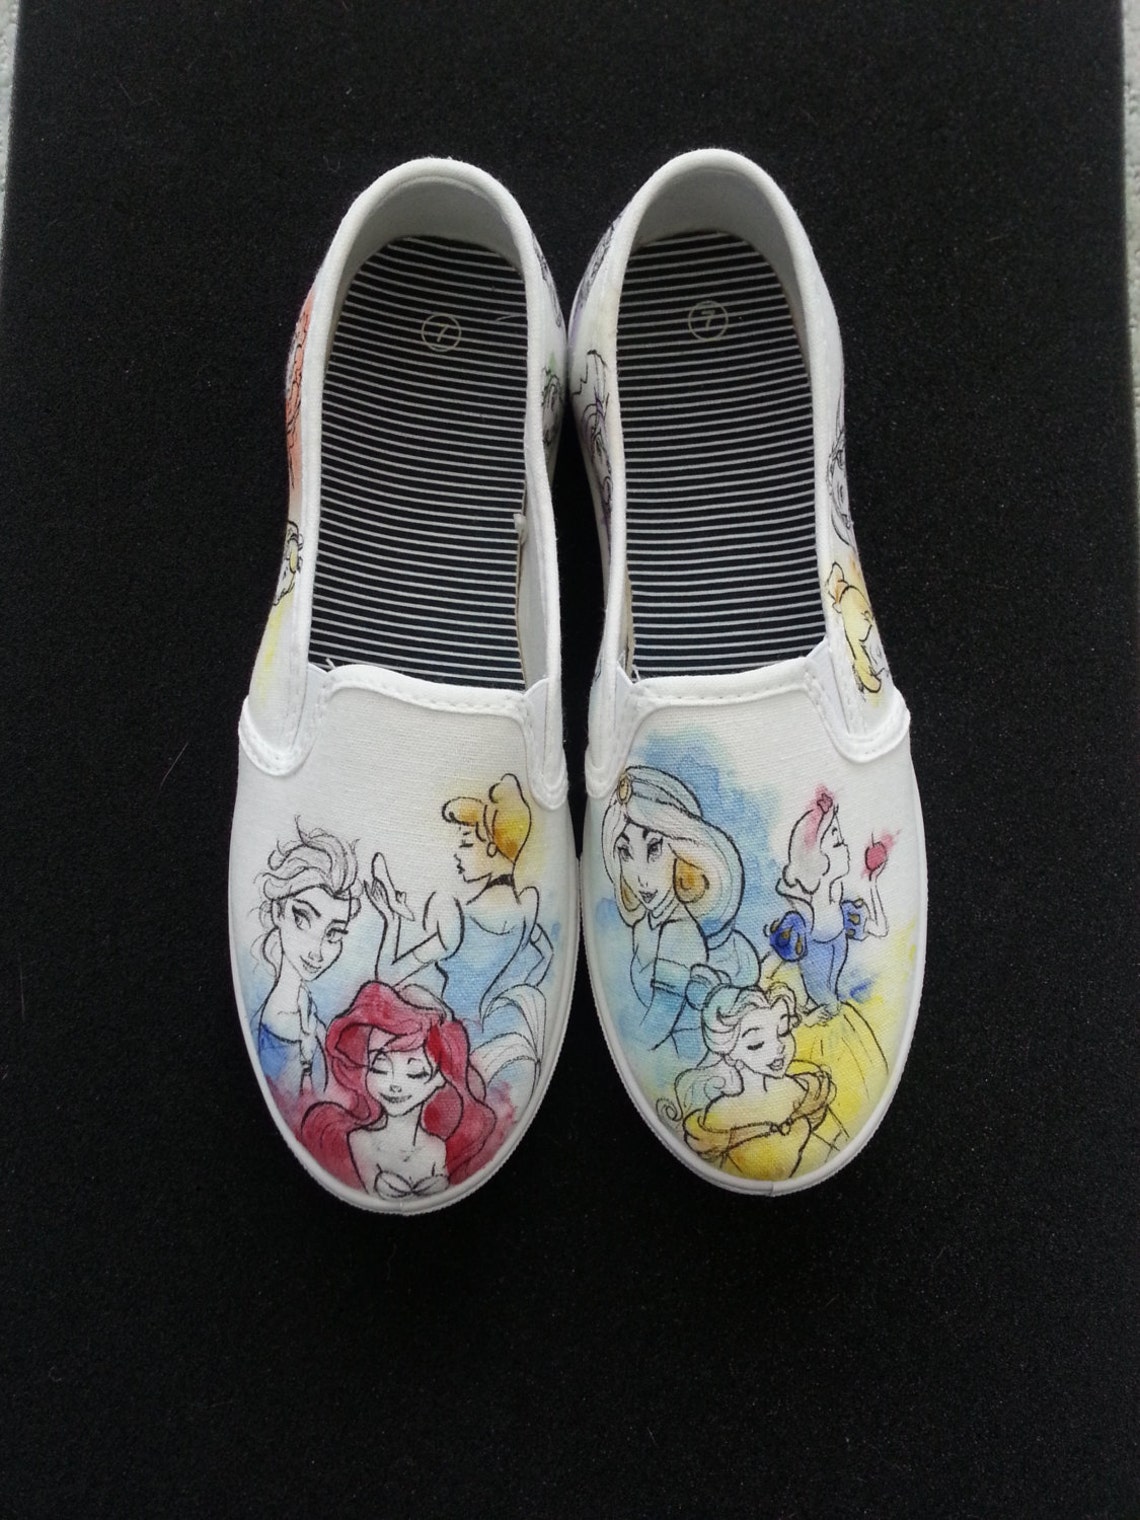 Disney's Princesses Themed Shoes With Ariel Anna Elsa - Etsy